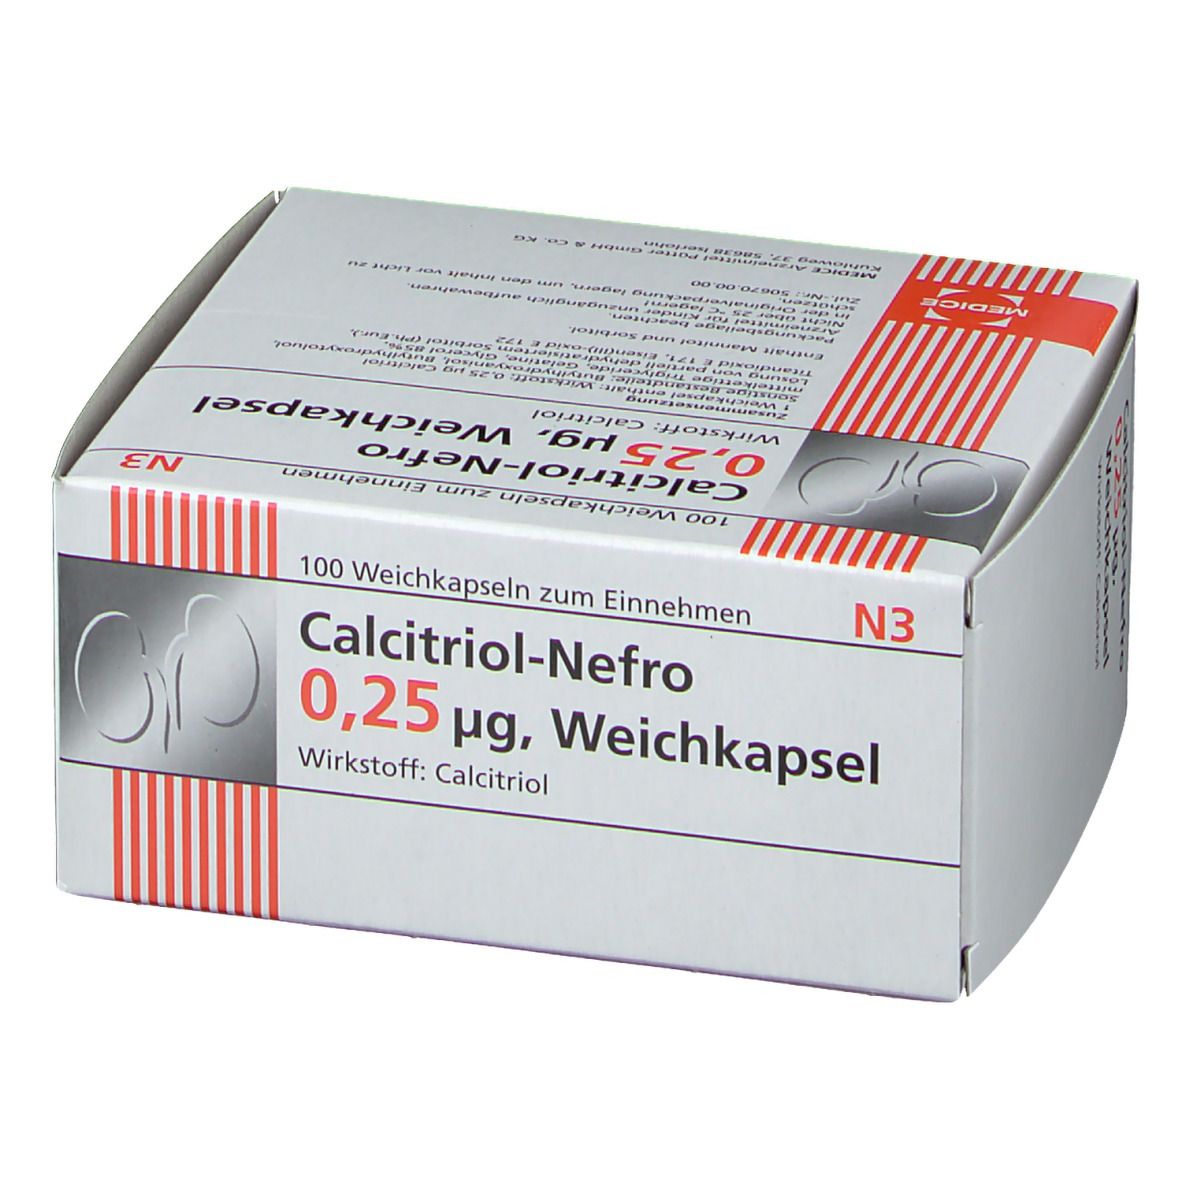 Calcitriol-Nefro 0,25 µg